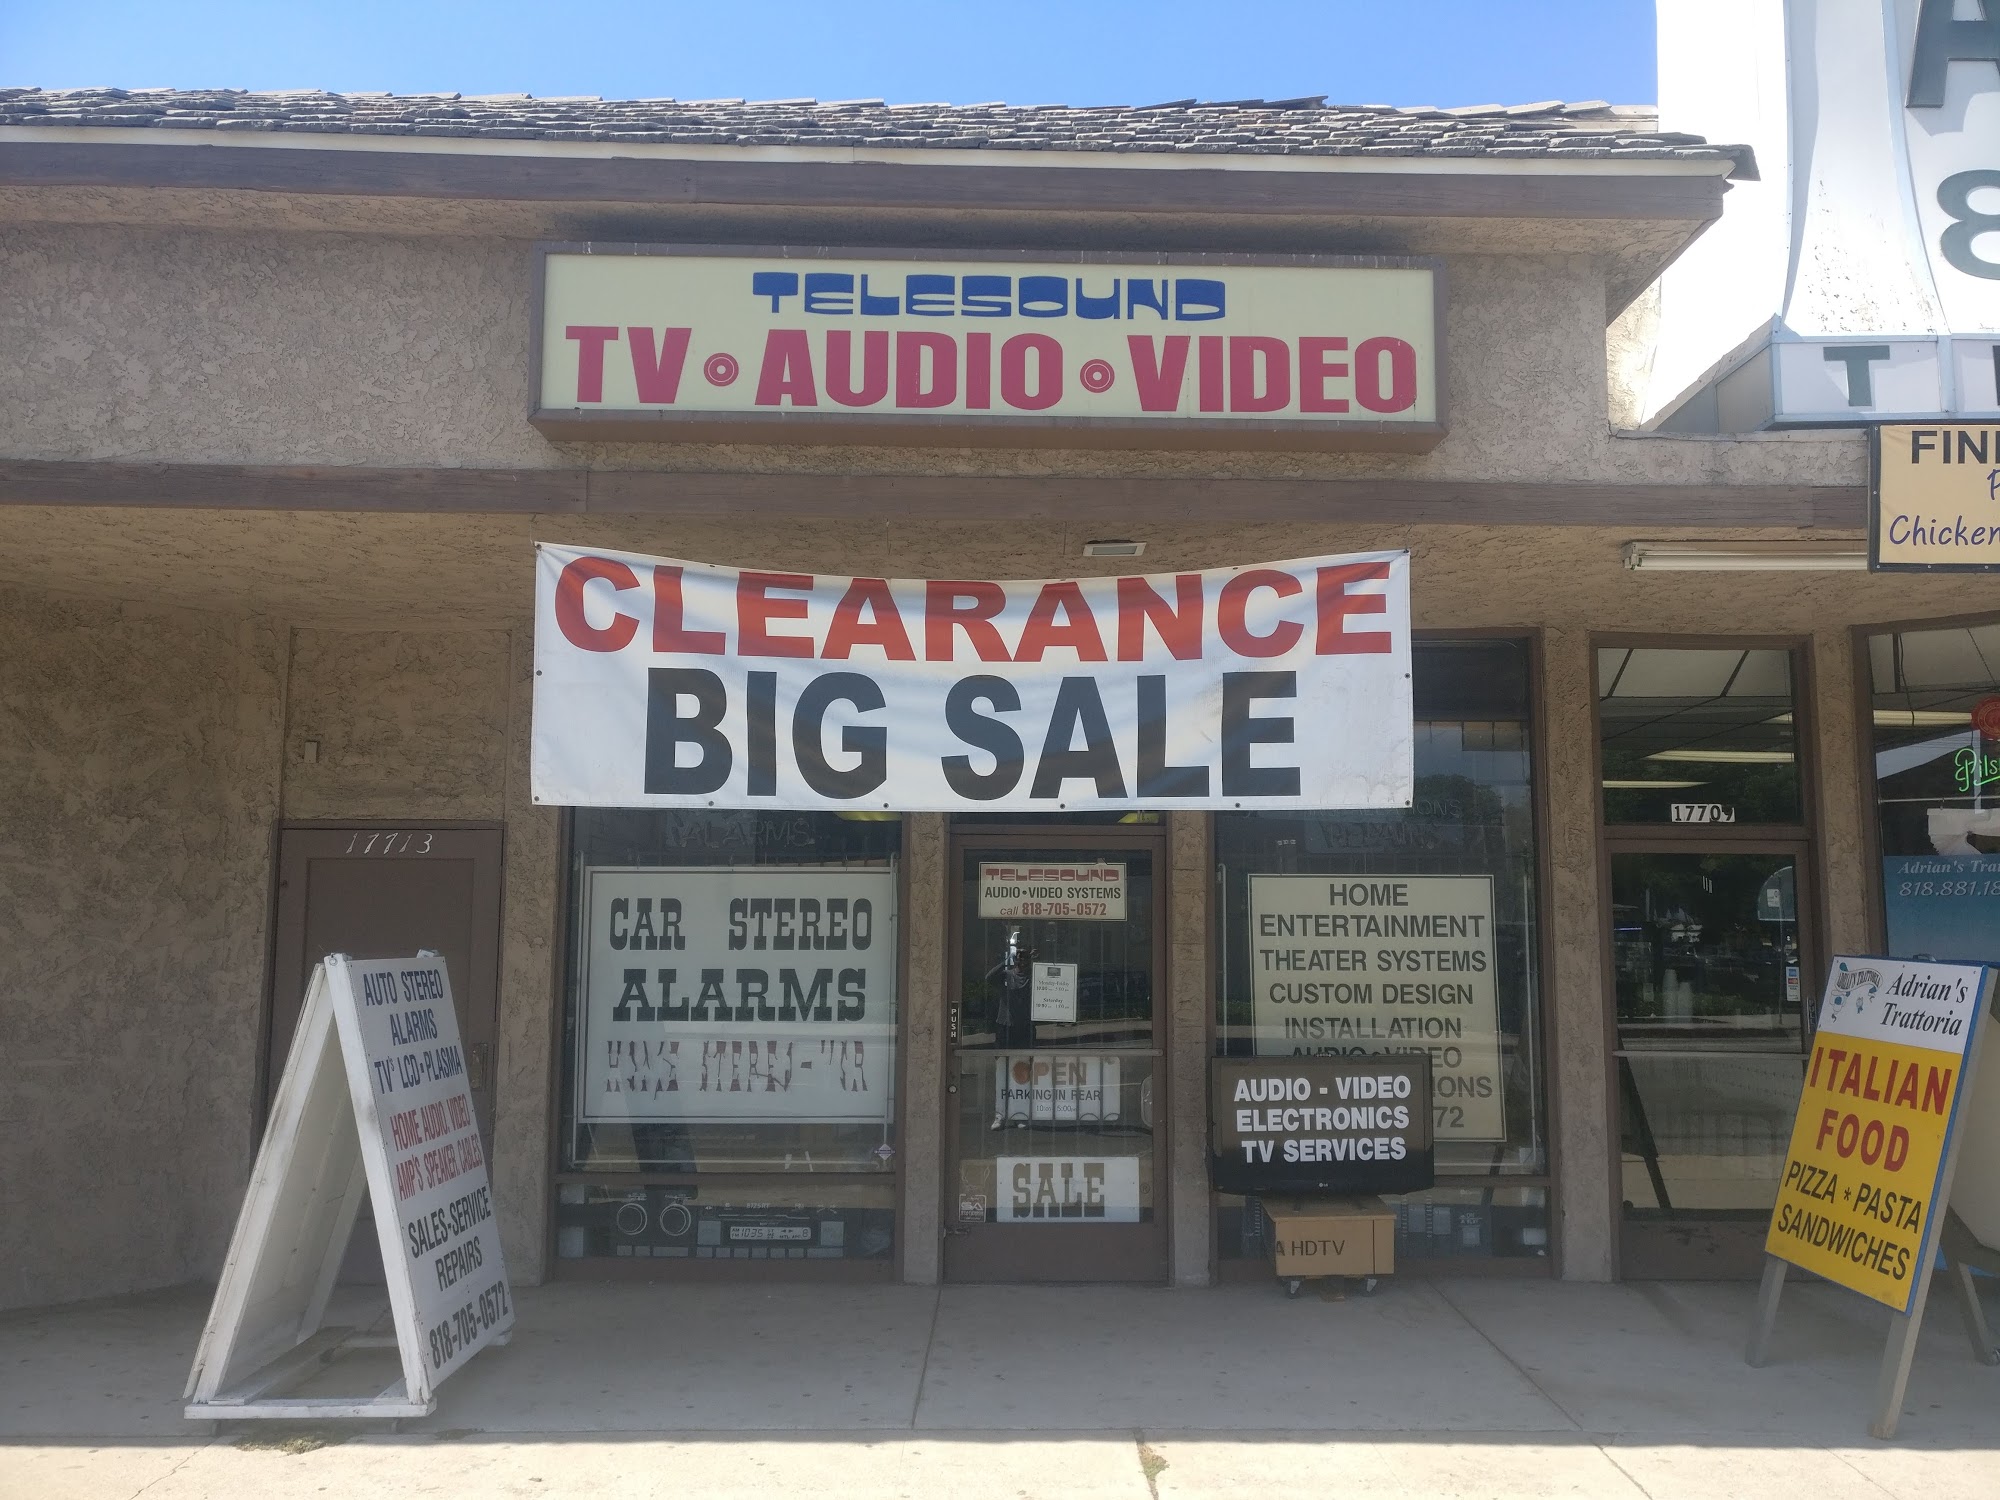 Telesound TV Audio Video and Electronics